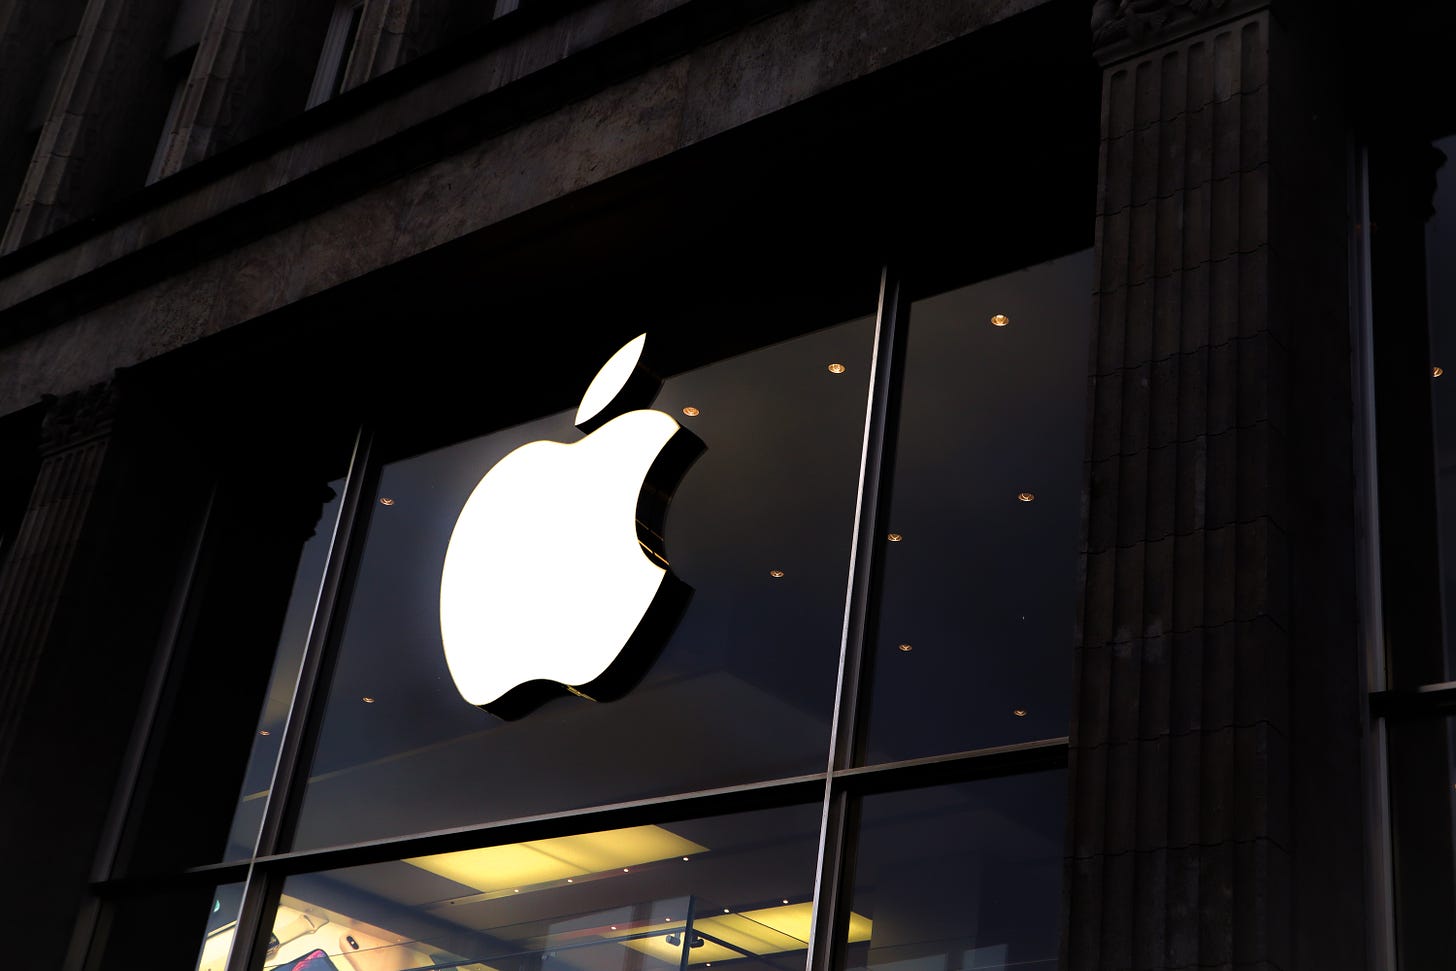 An image of Apple's logo